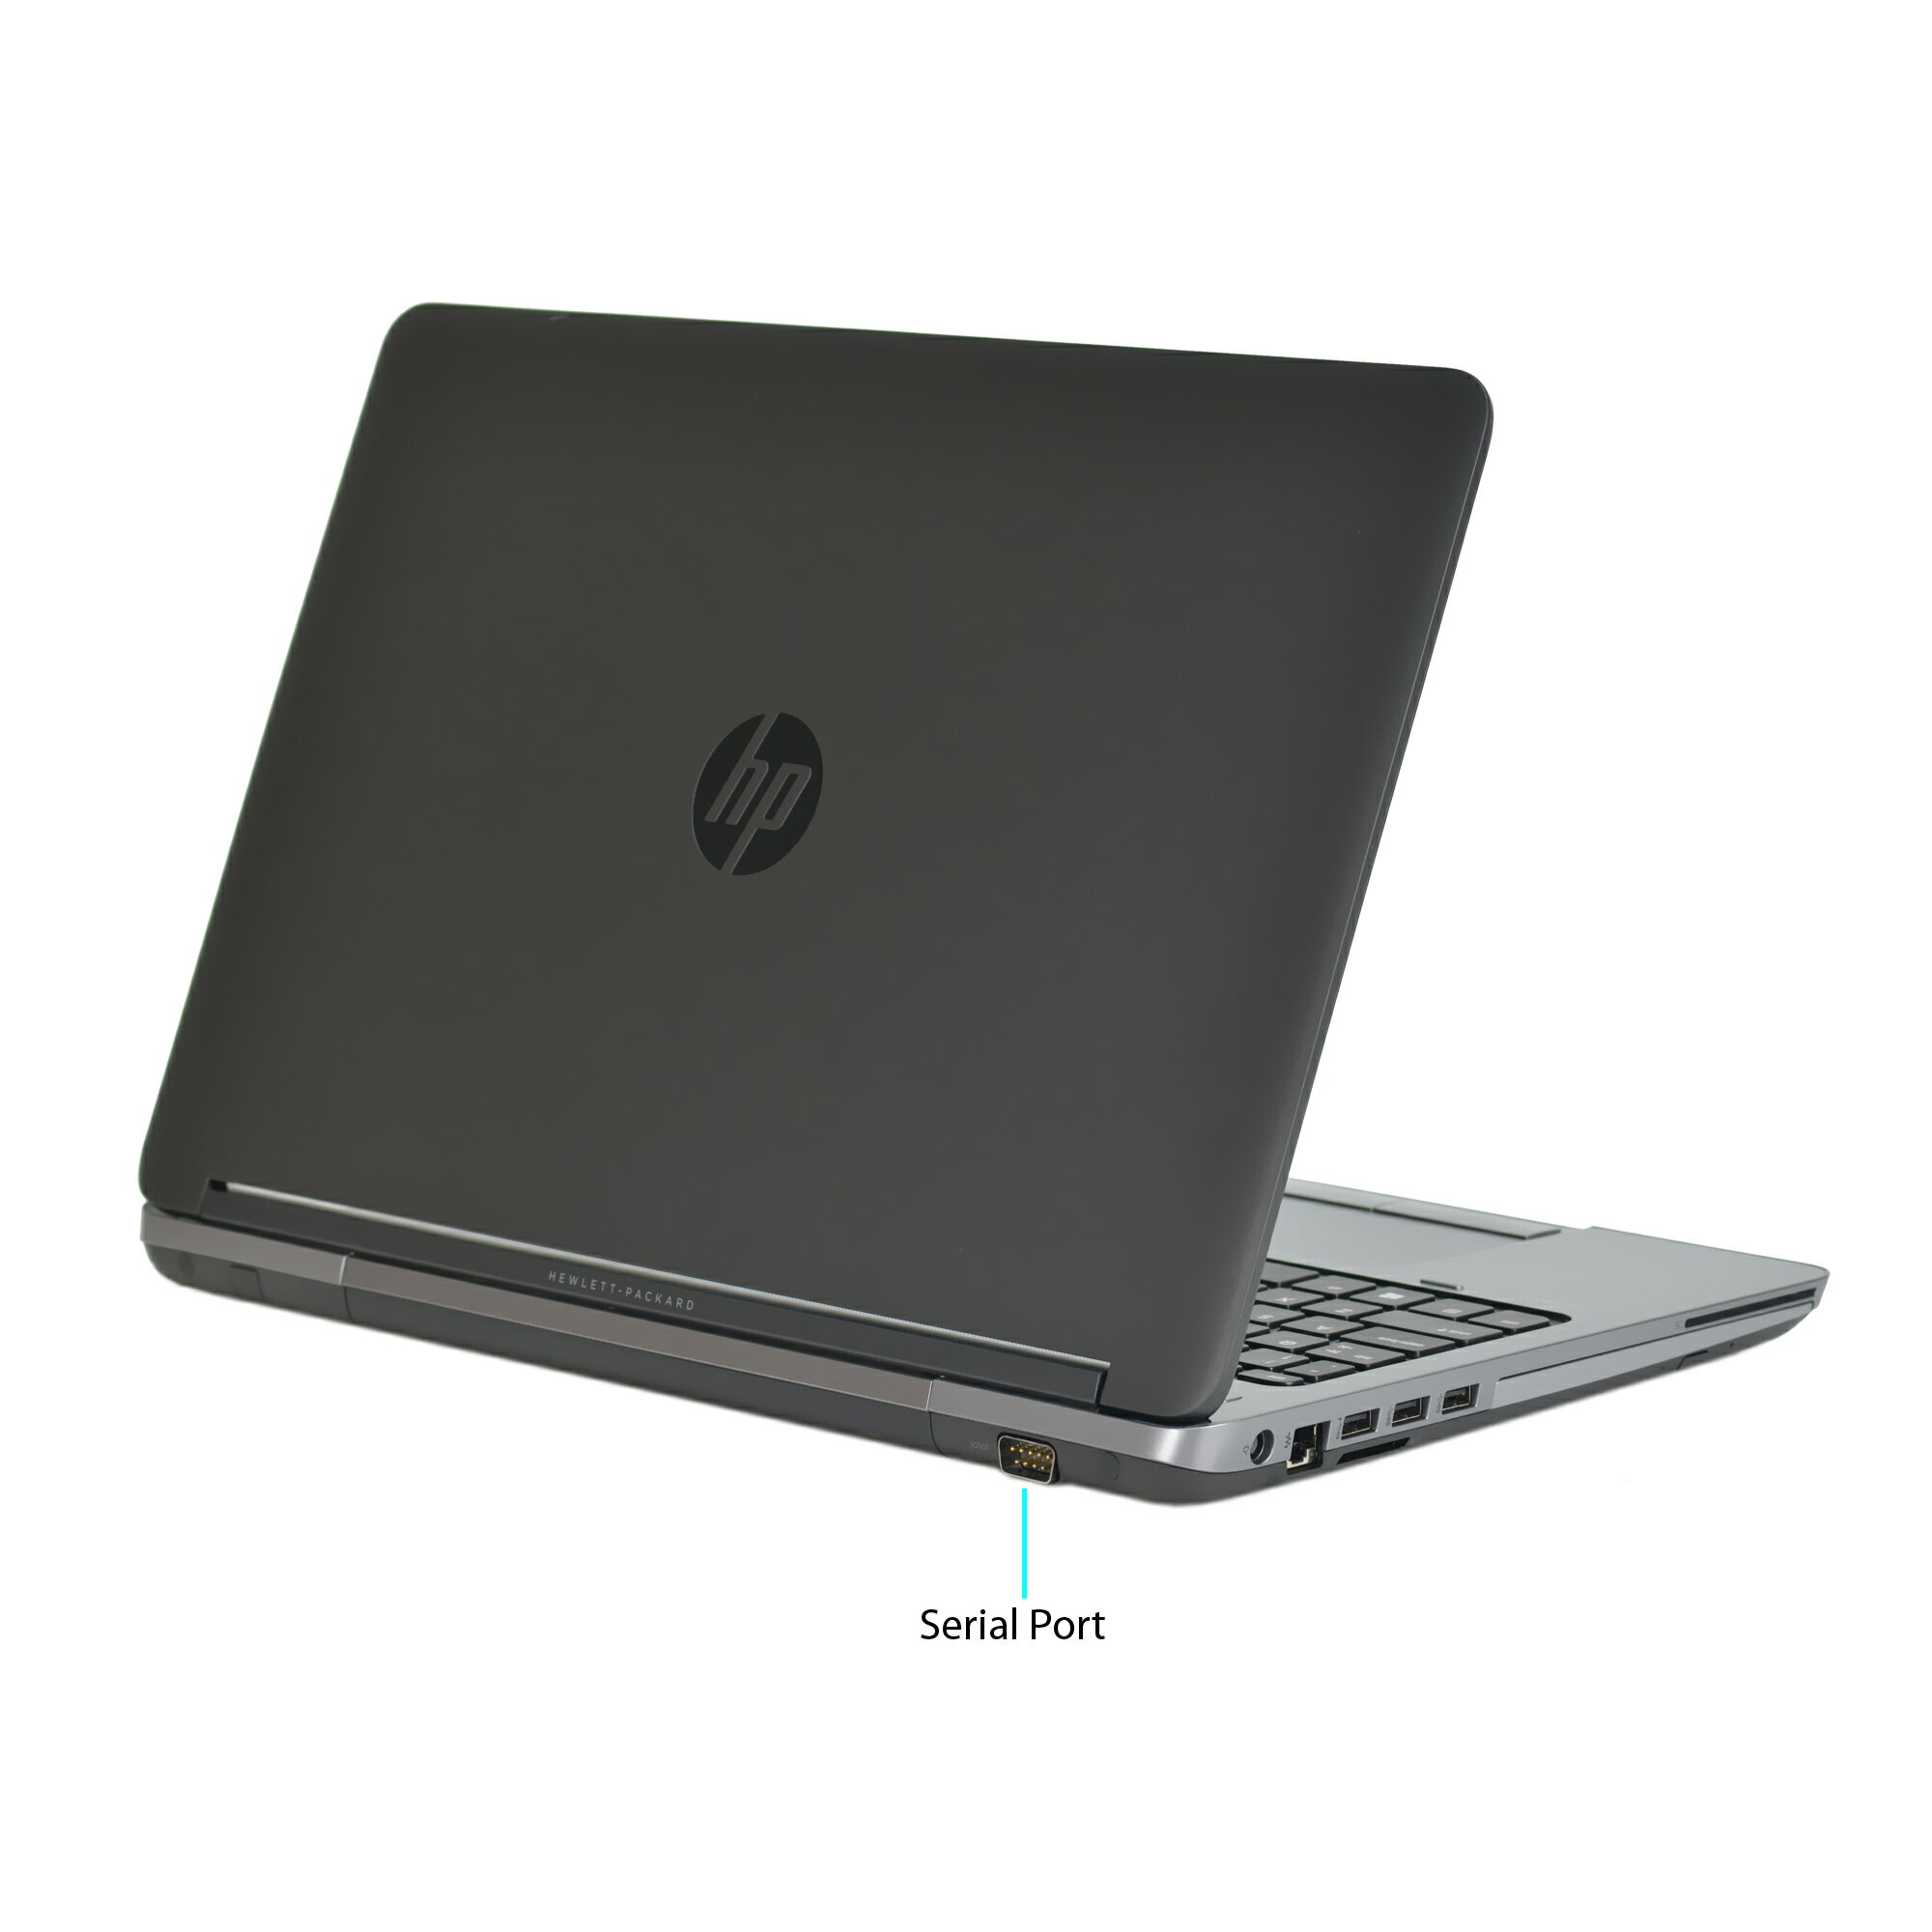 HP 650 G1 Laptop Core i5-2.5GHz, 8GB RAM, 128GB SSD, DVD, 15.6", Win 10 Pro (64-bit) 1